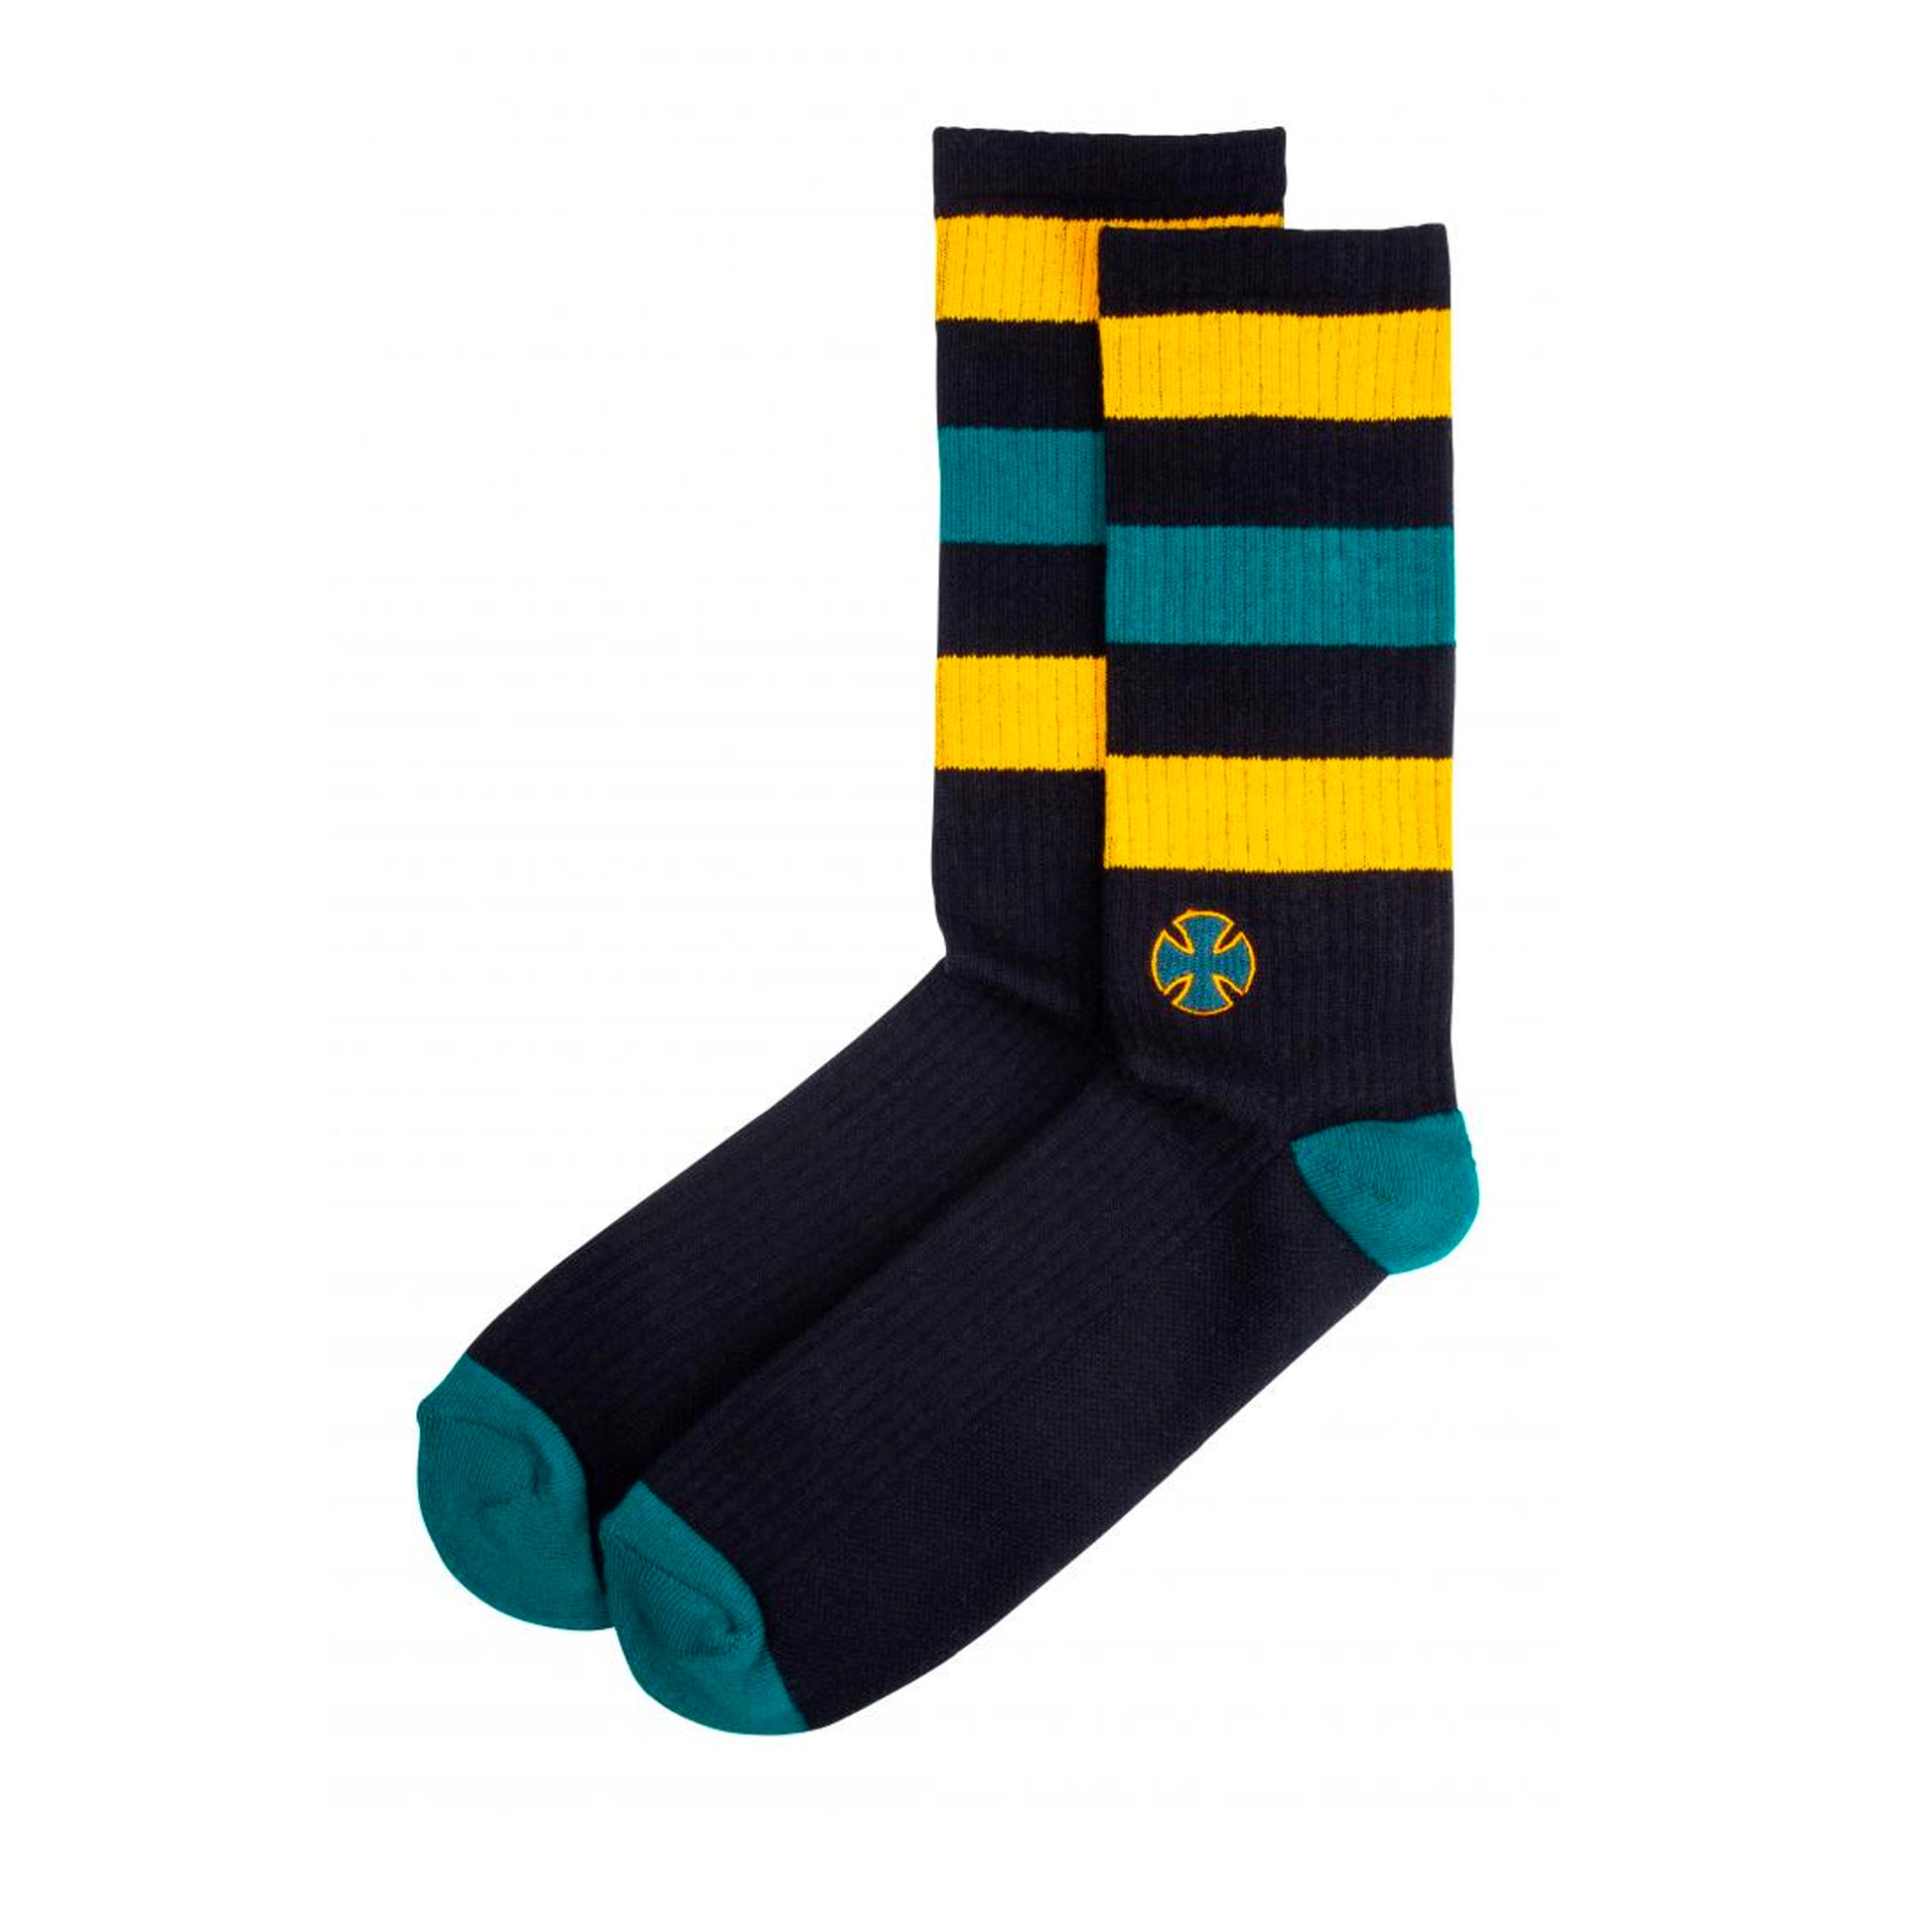 Independent Sock Trip Sock - Black/Green - Prime Delux Store